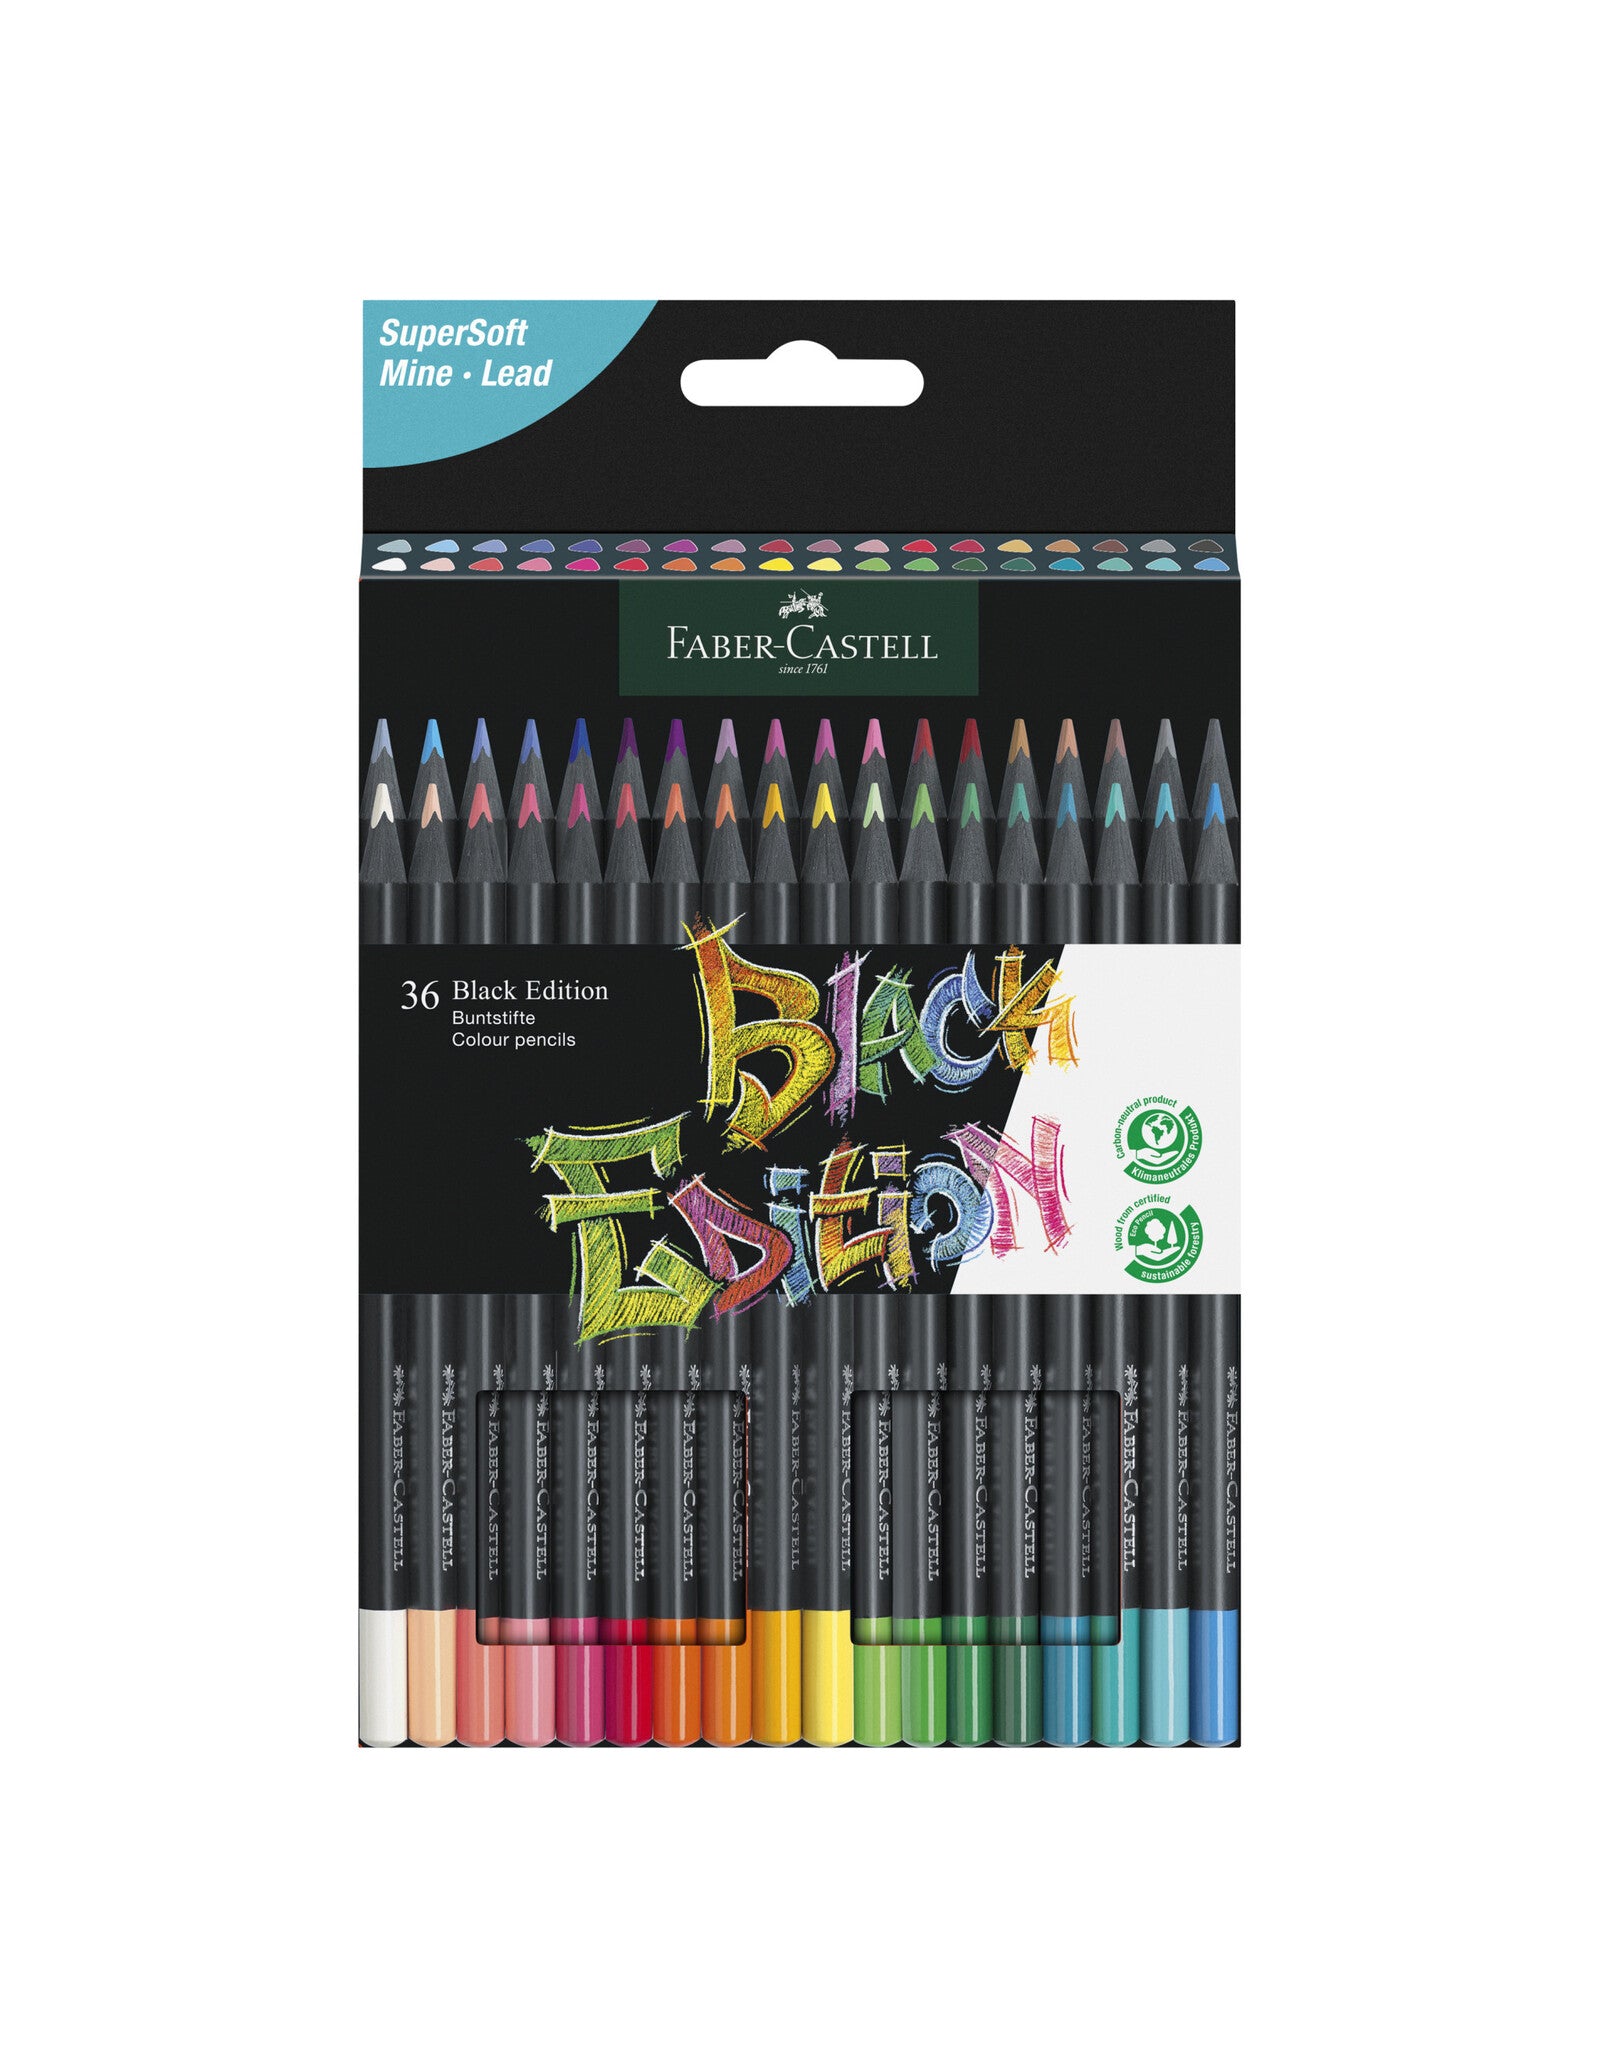 Faber-Castell Black Edition 36 Color Pencil Set – Guiry's